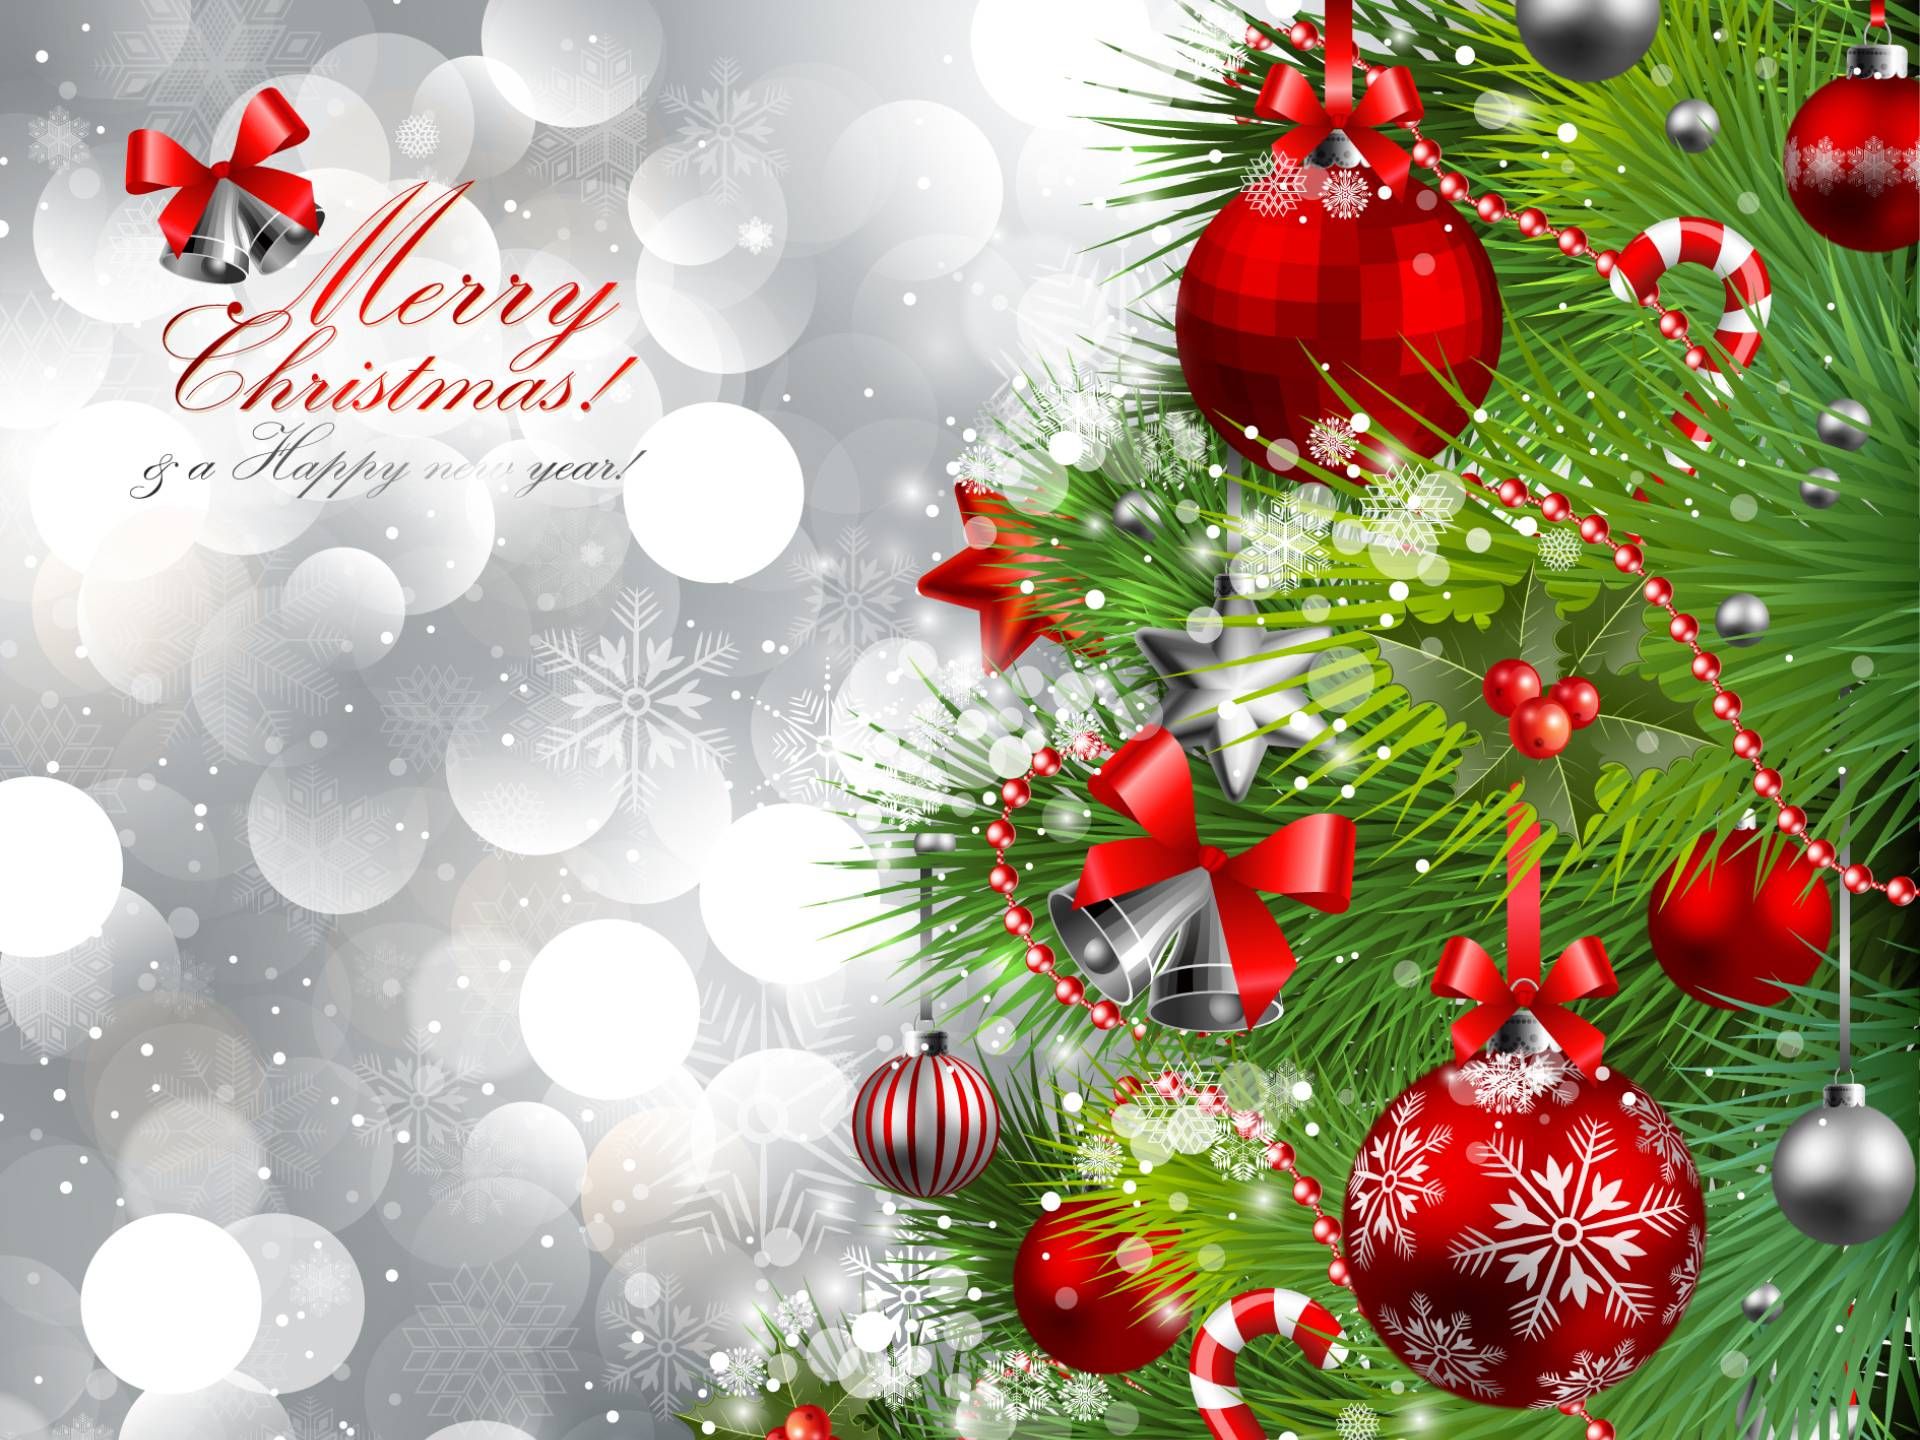 Merry Christmas HD Wallpaper, Background. Merry christmas wallpaper, Christmas desktop, Christmas wallpaper hd